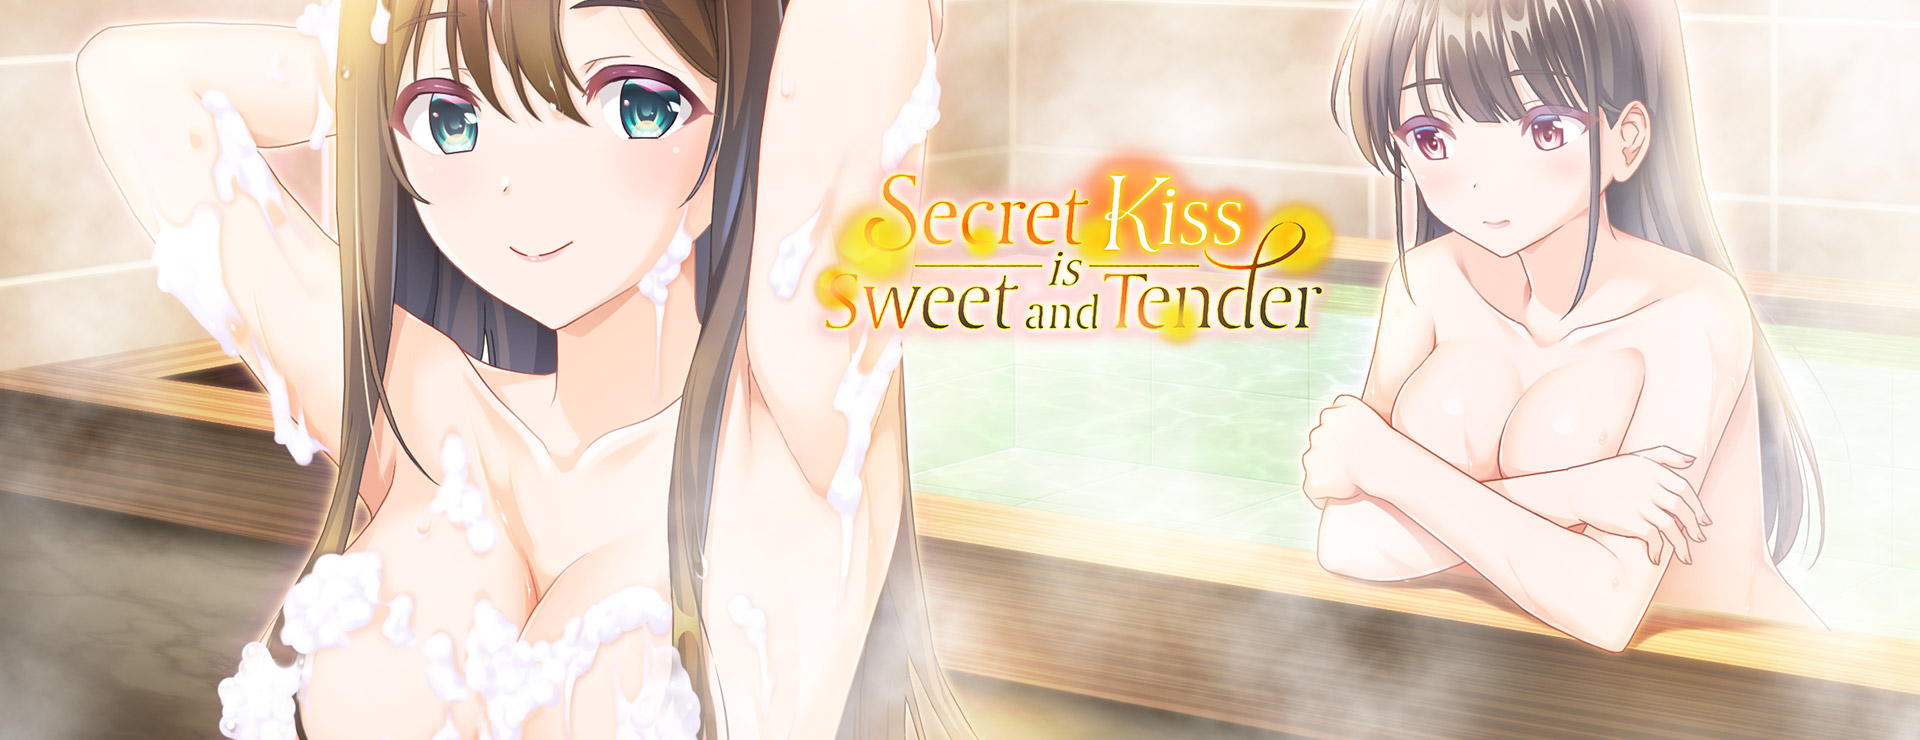 Secret Kiss is Sweet and Tender - Powieść wizualna Gra